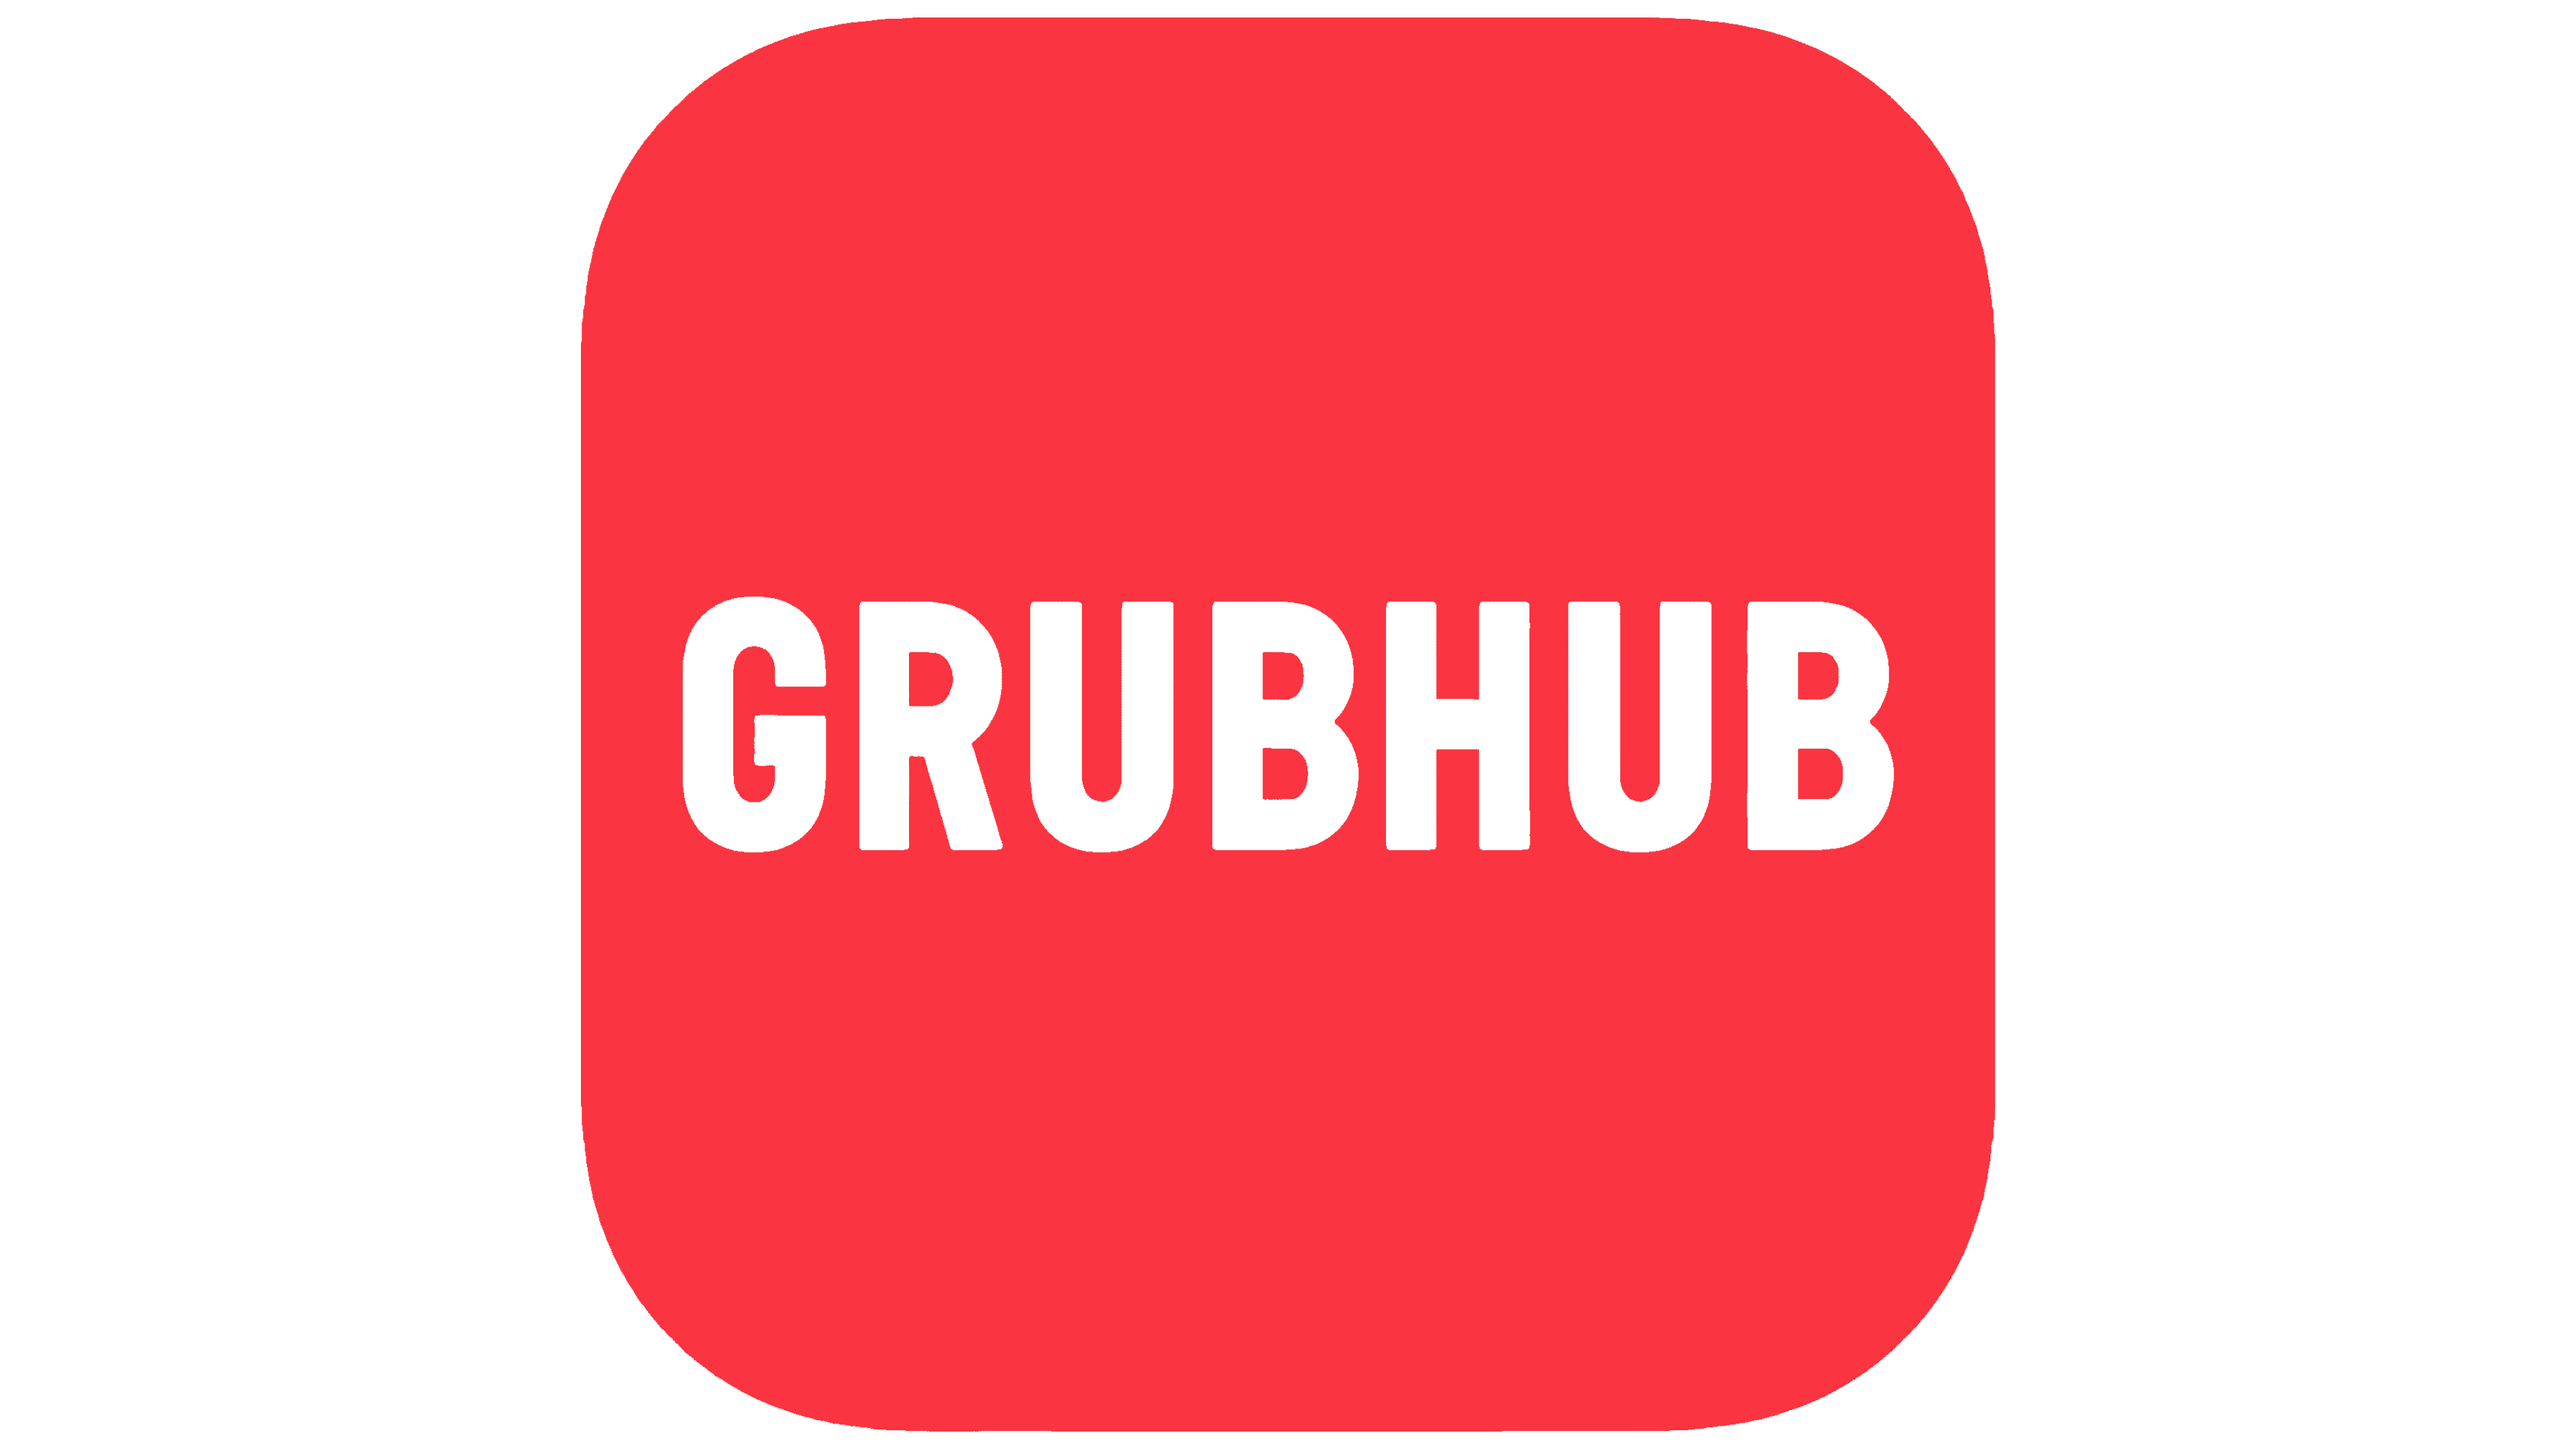 Grubhub Logo PNG Photos